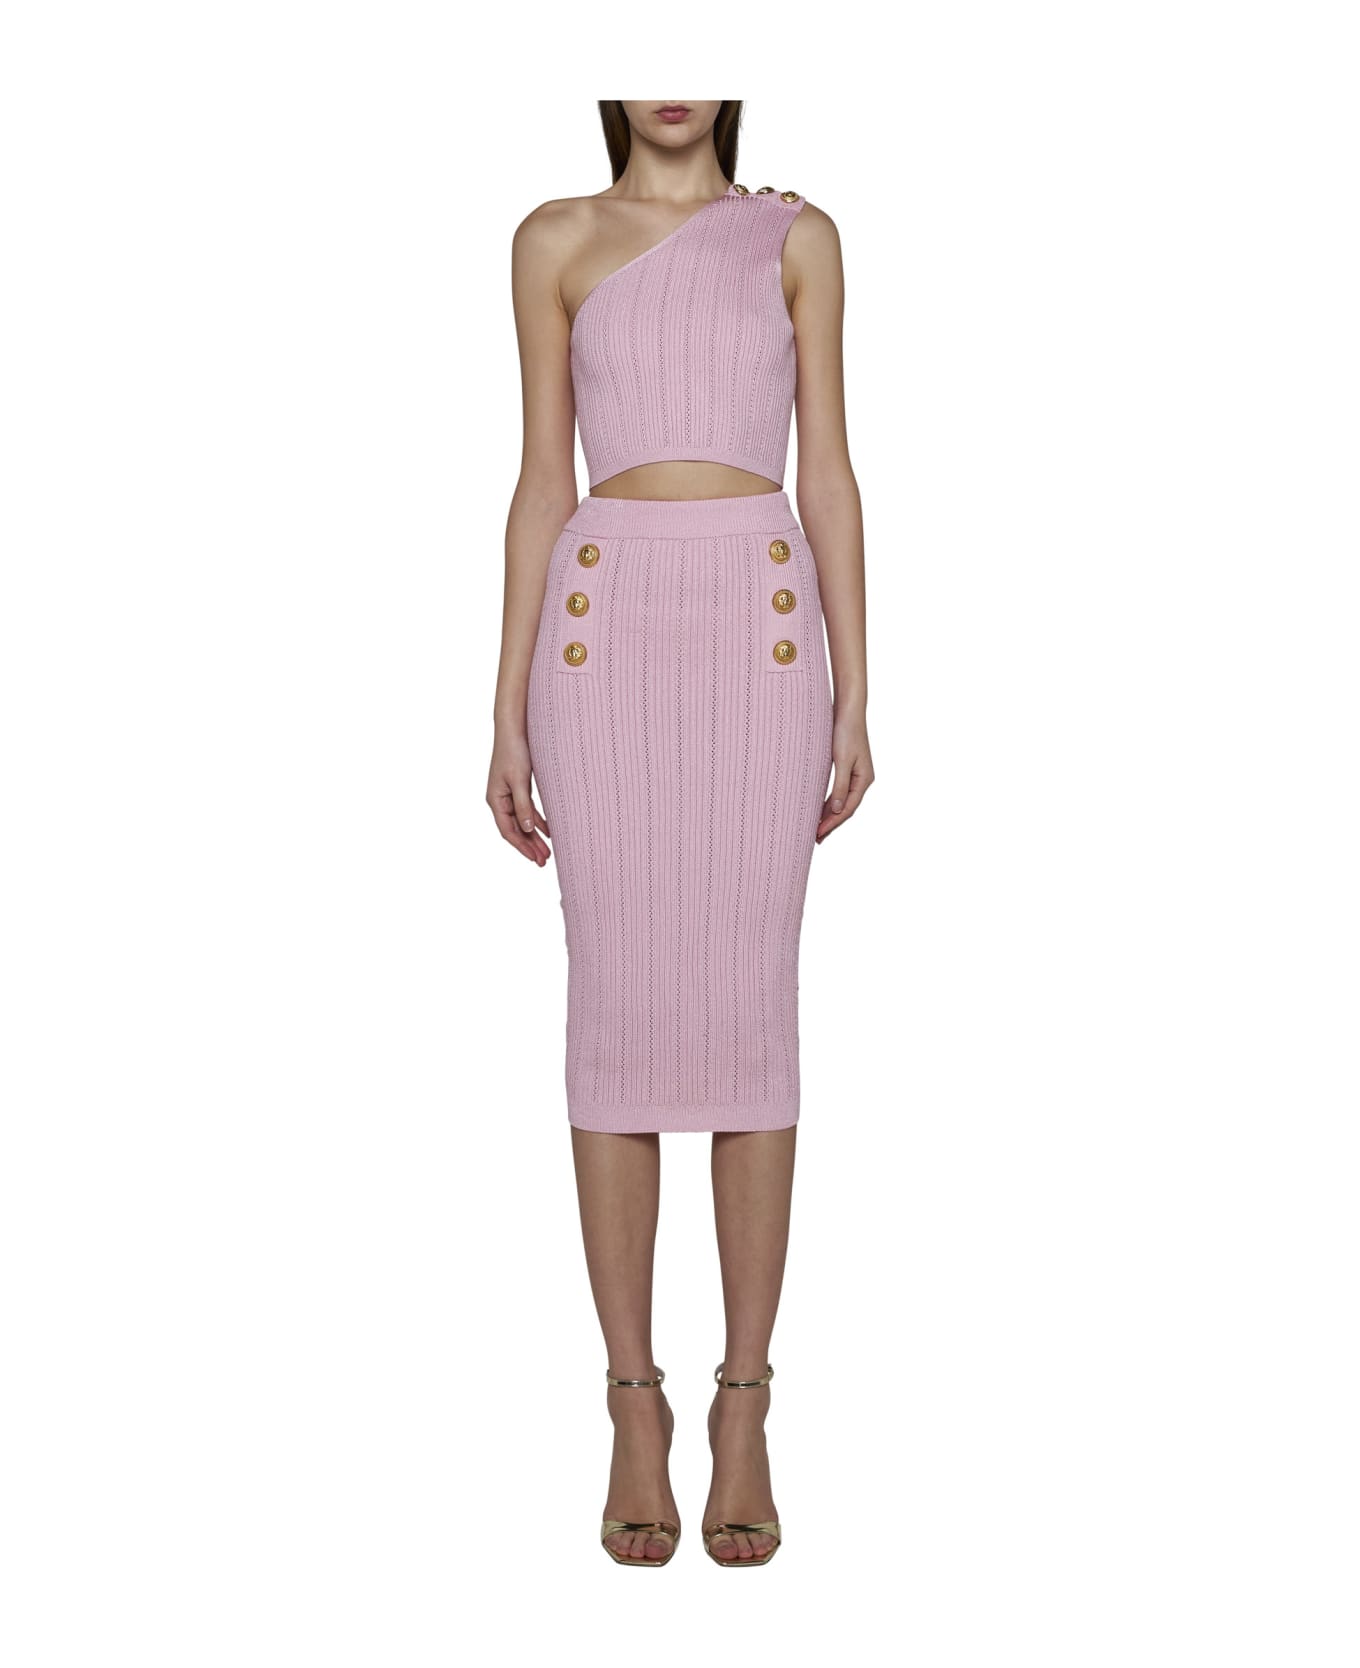 Balmain Skirt - Rose スカート